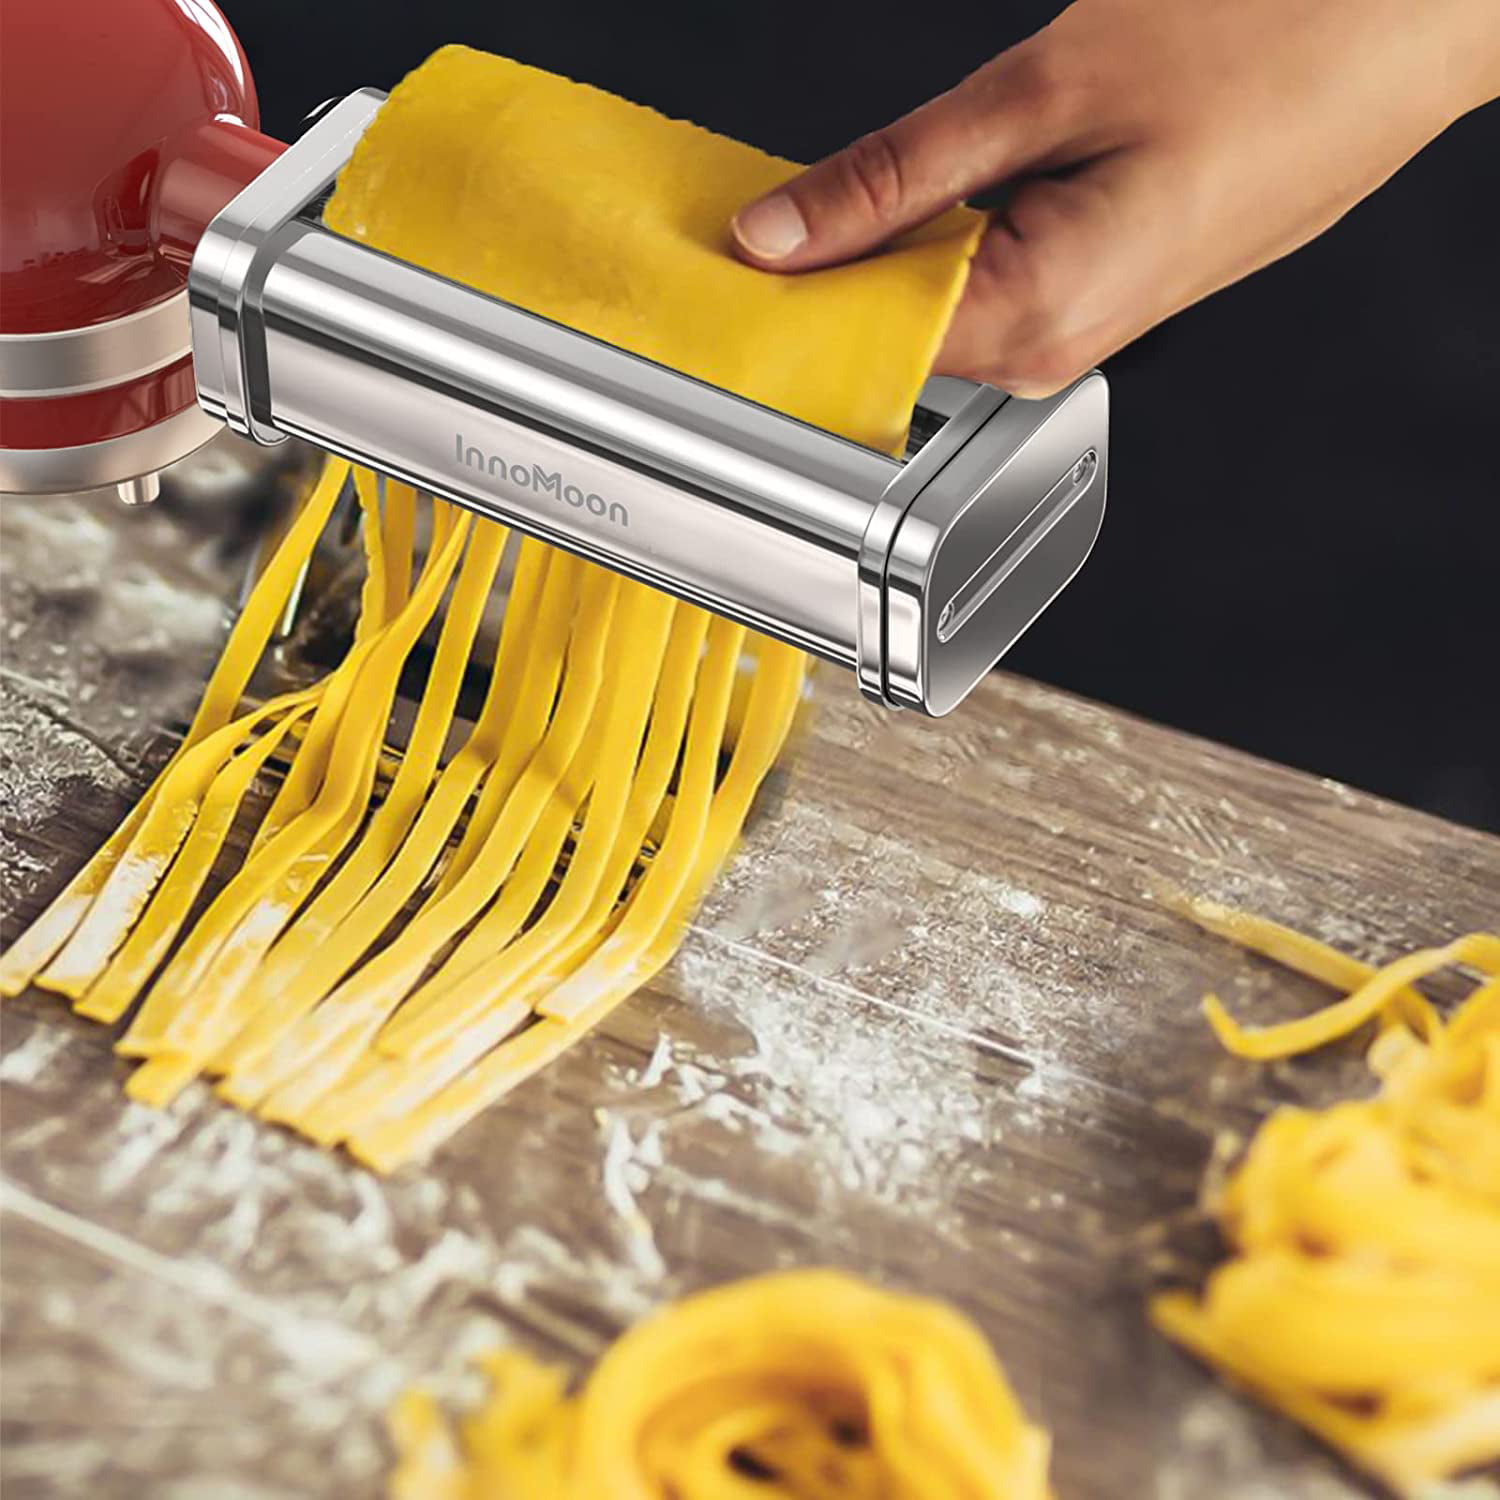 Kenome Pasta Maker Attachment 3 in 1 Set for KitchenAid Stand